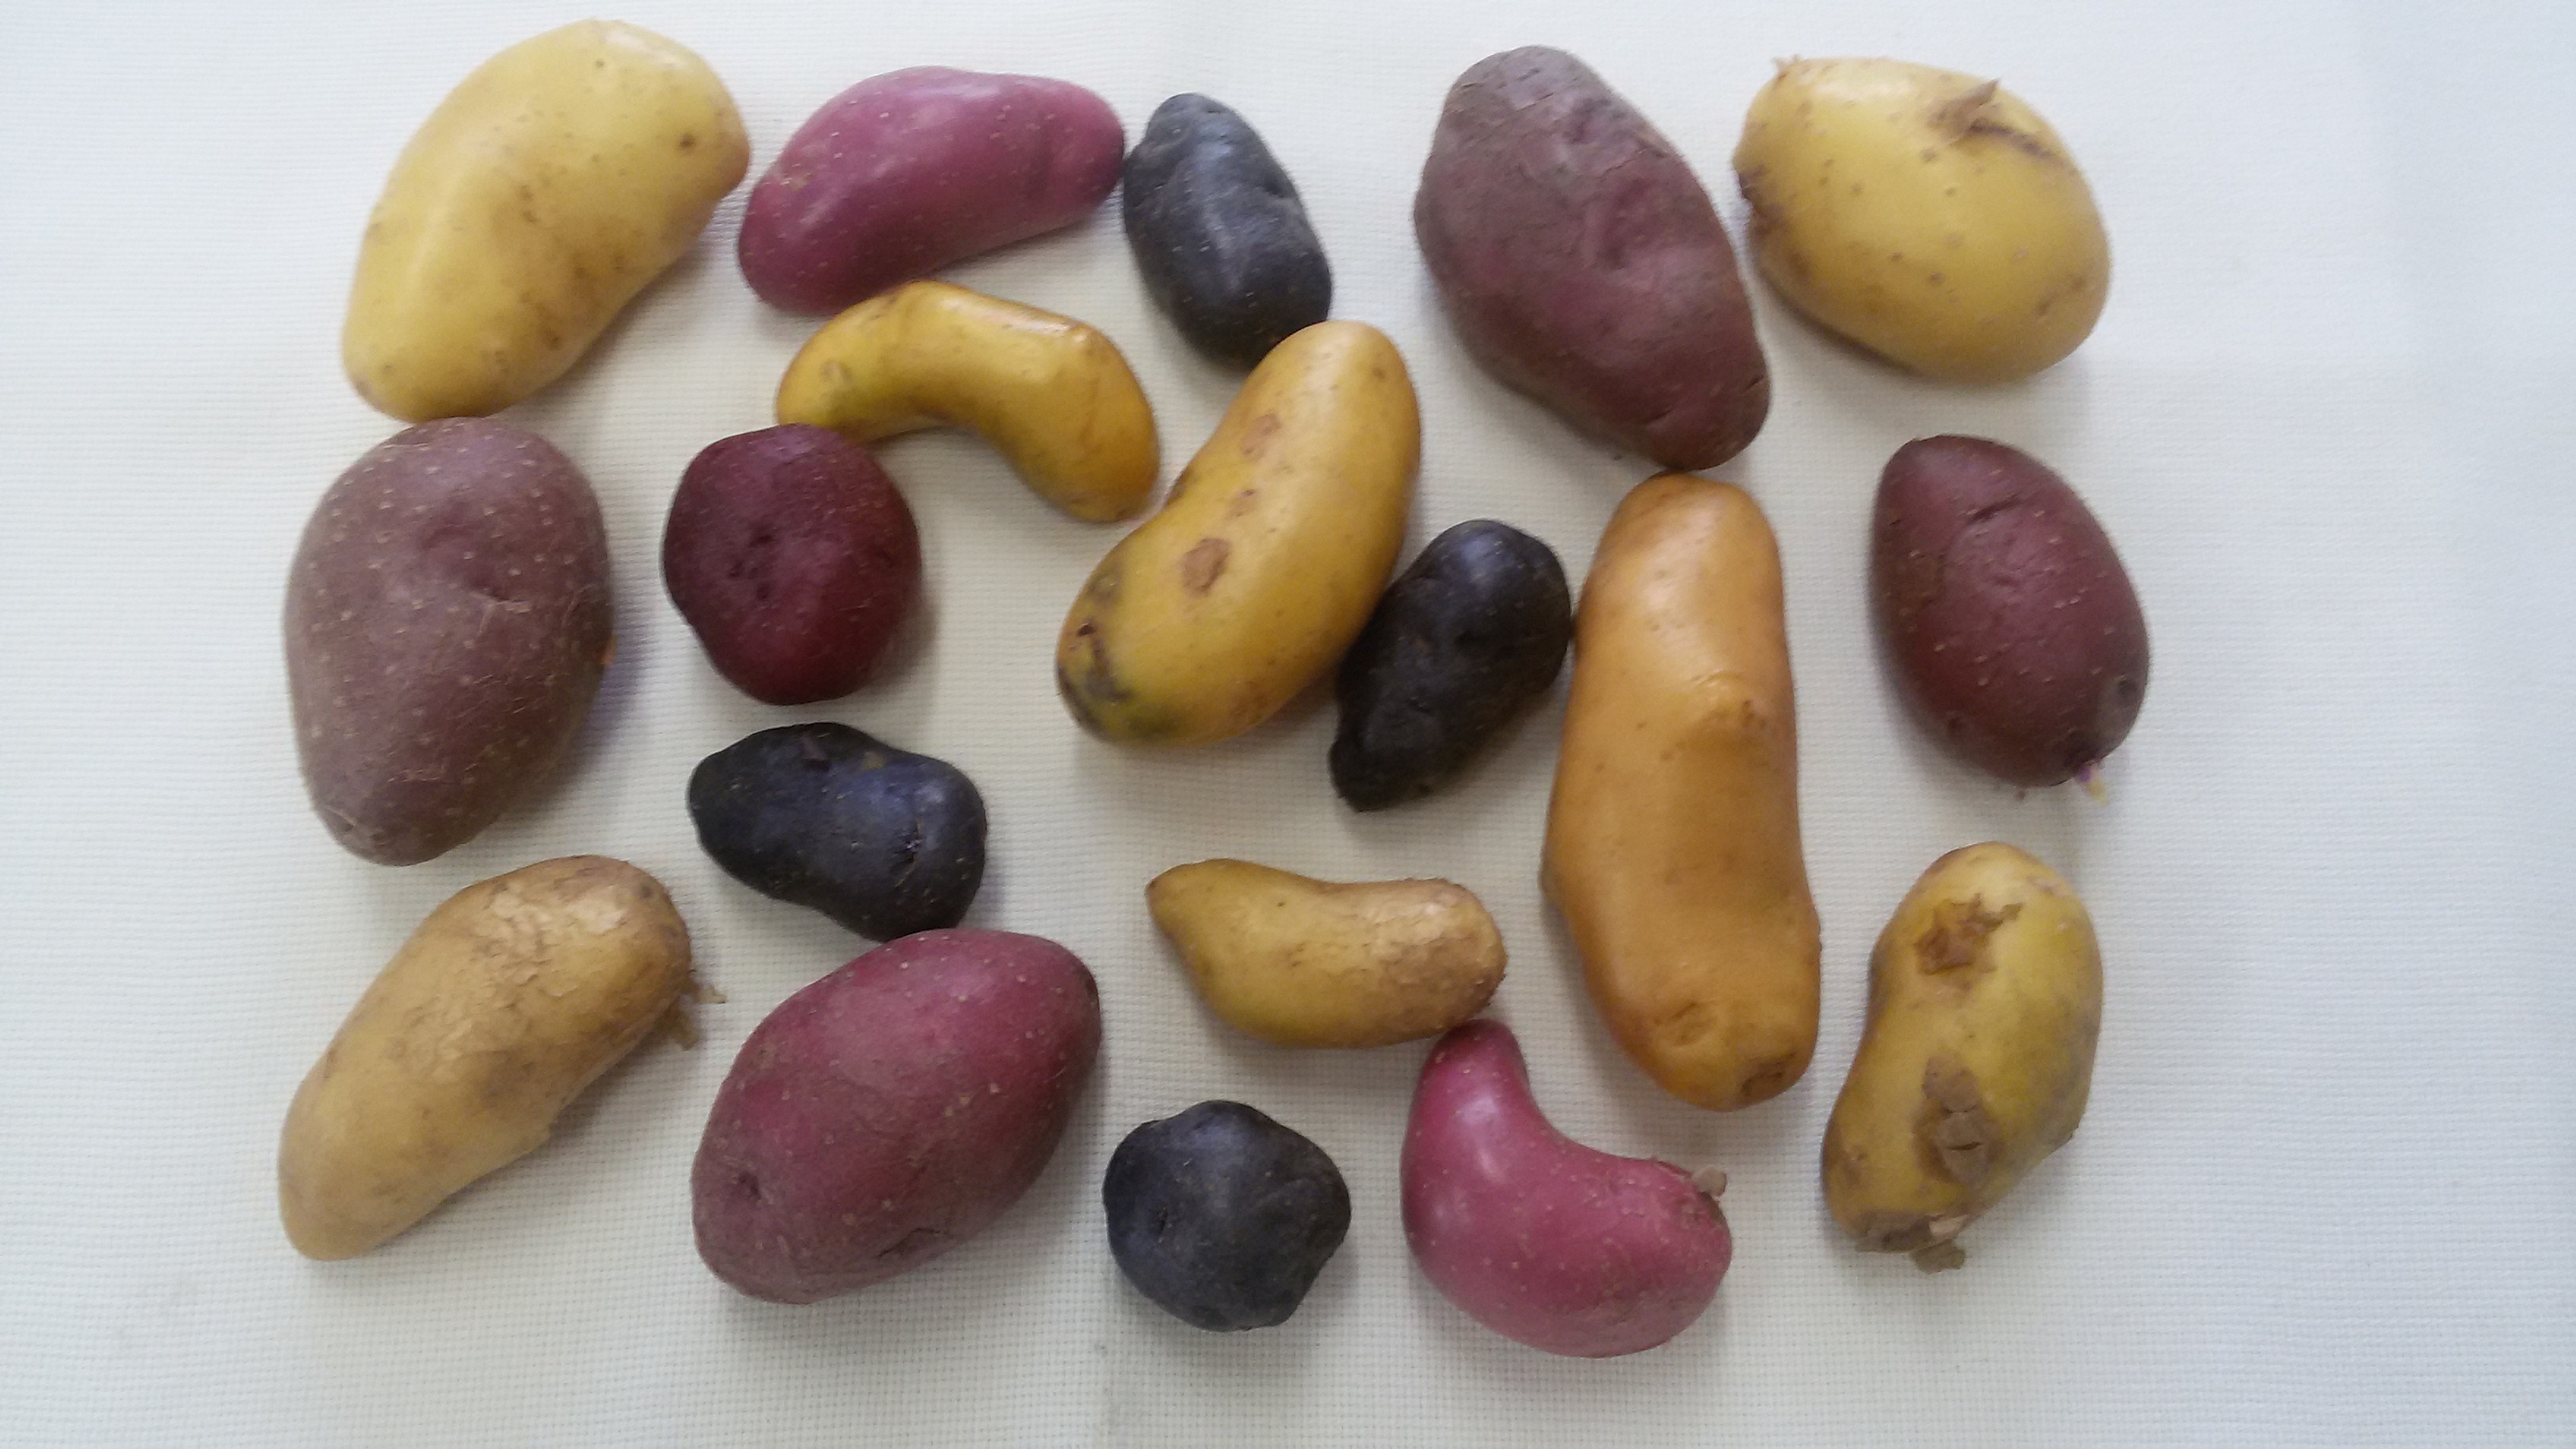 Kartoffelvielfalt aus eigenem Anbau